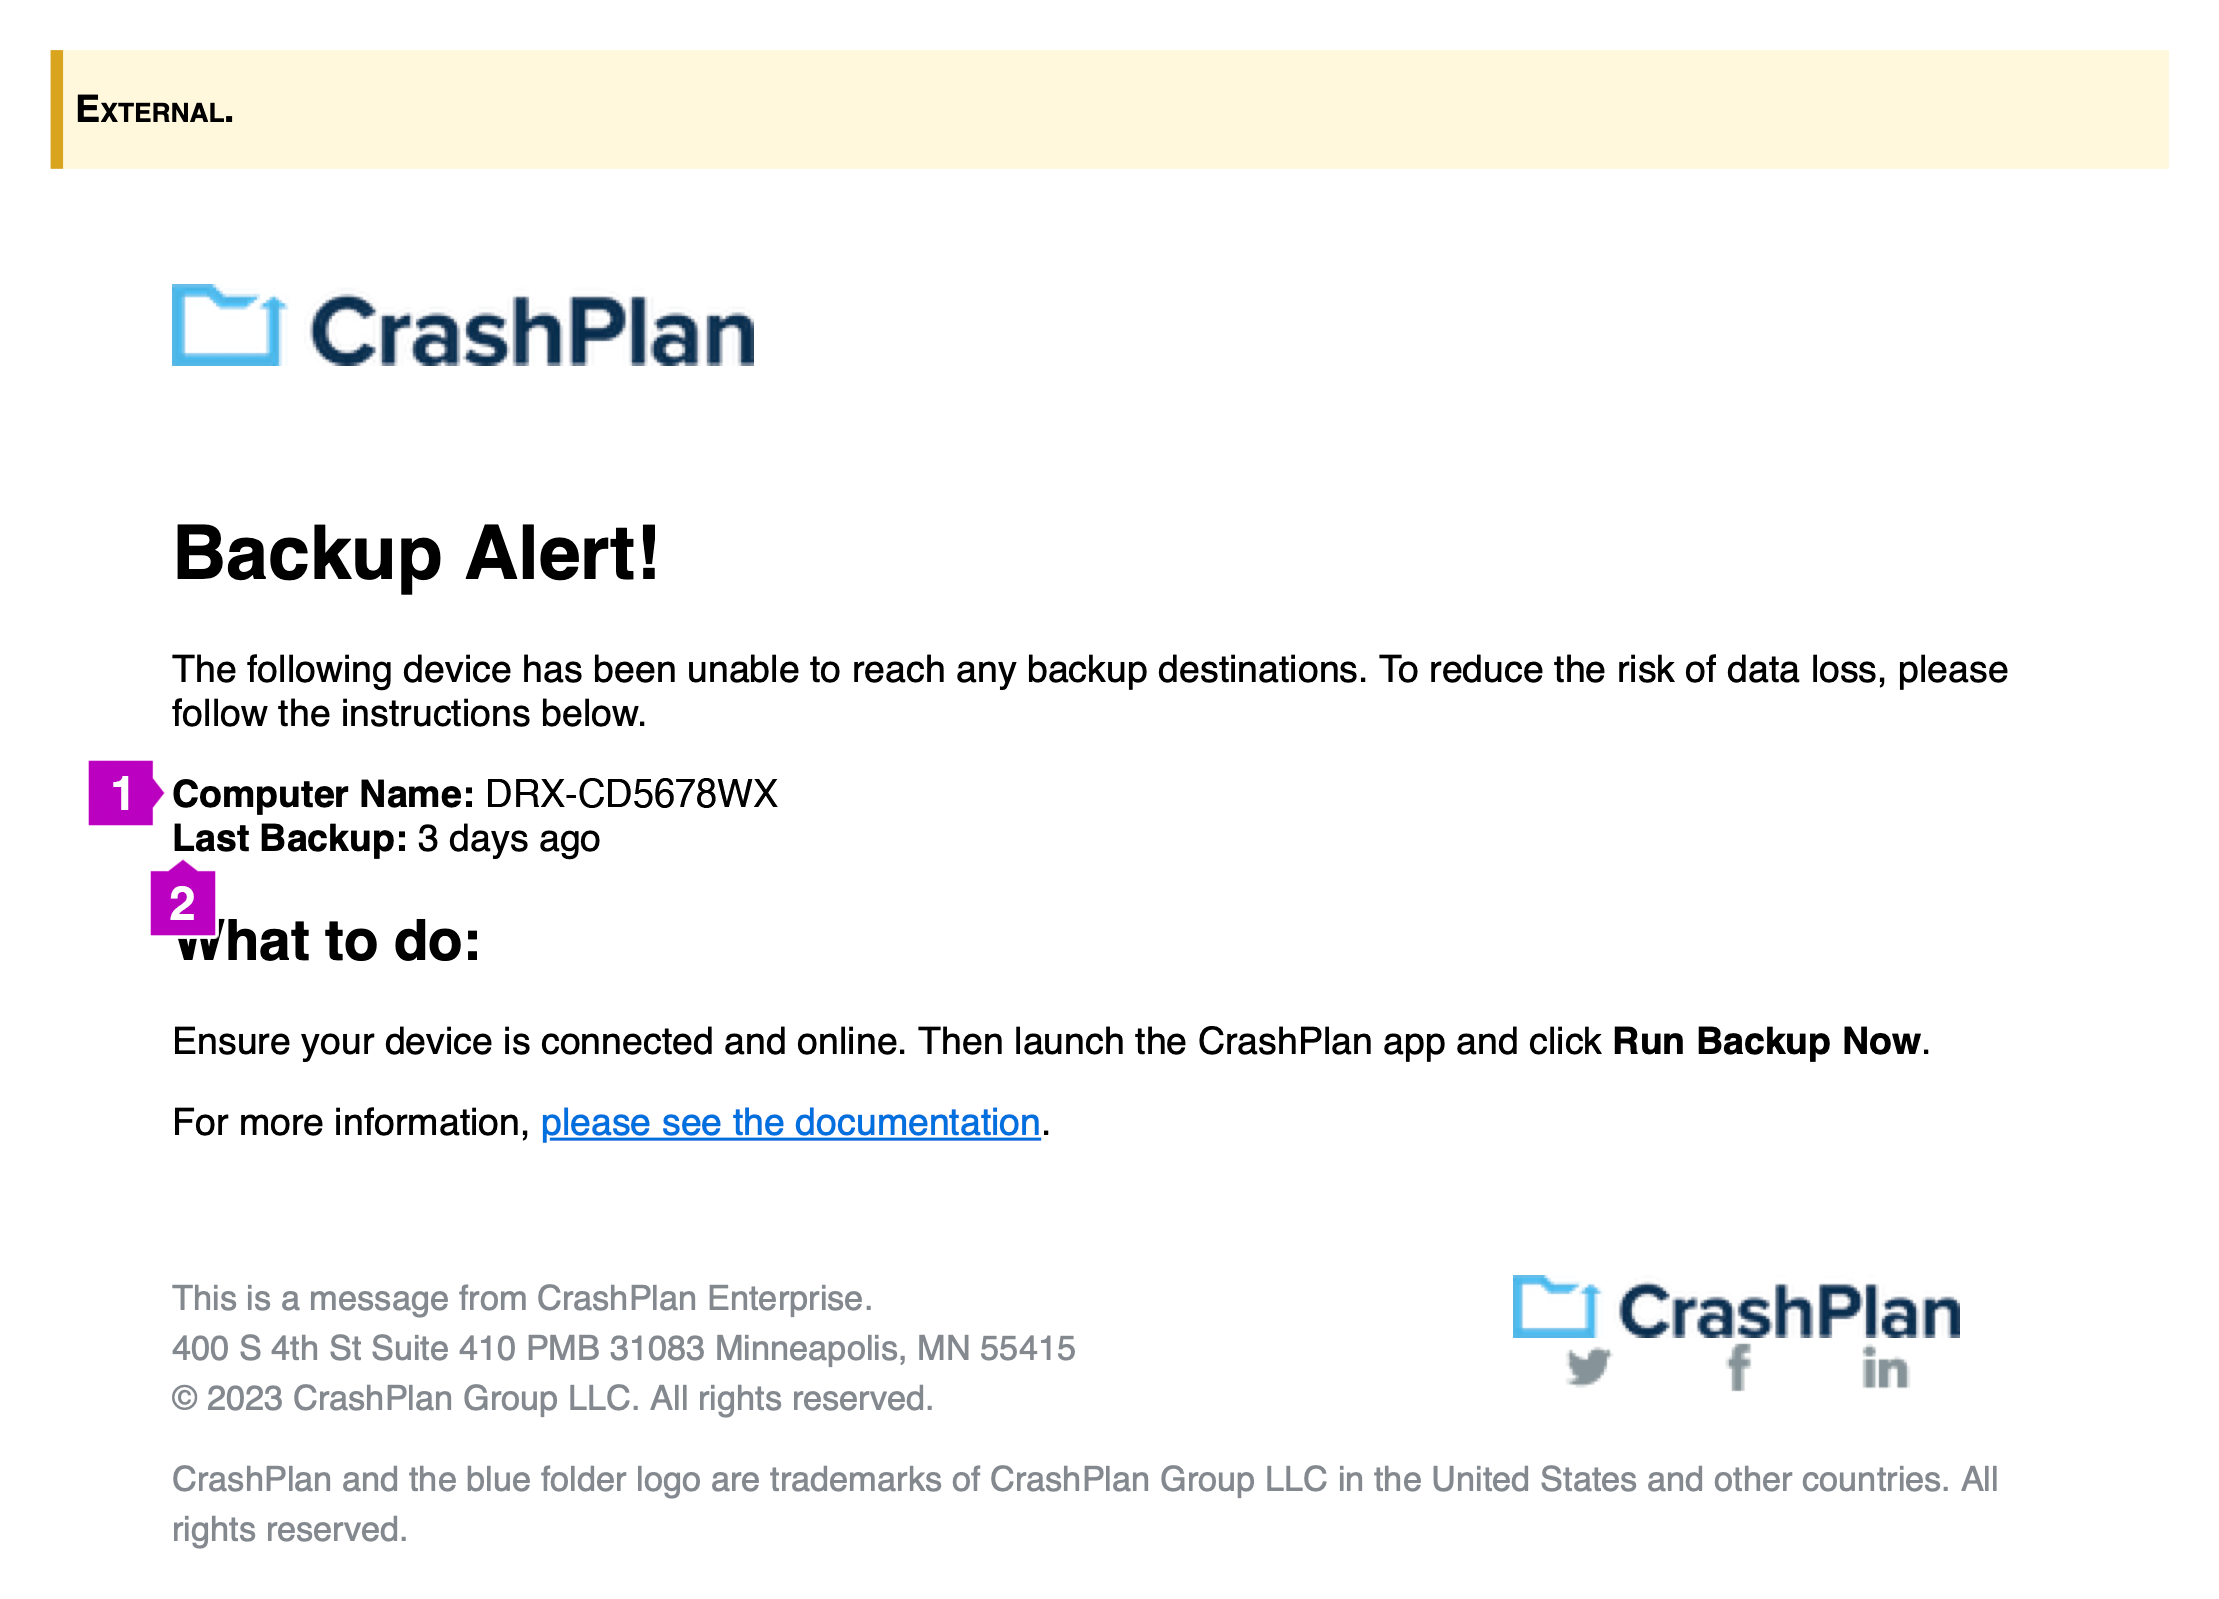 Screenshot of a CrashPlan Backup Alert email with callouts.